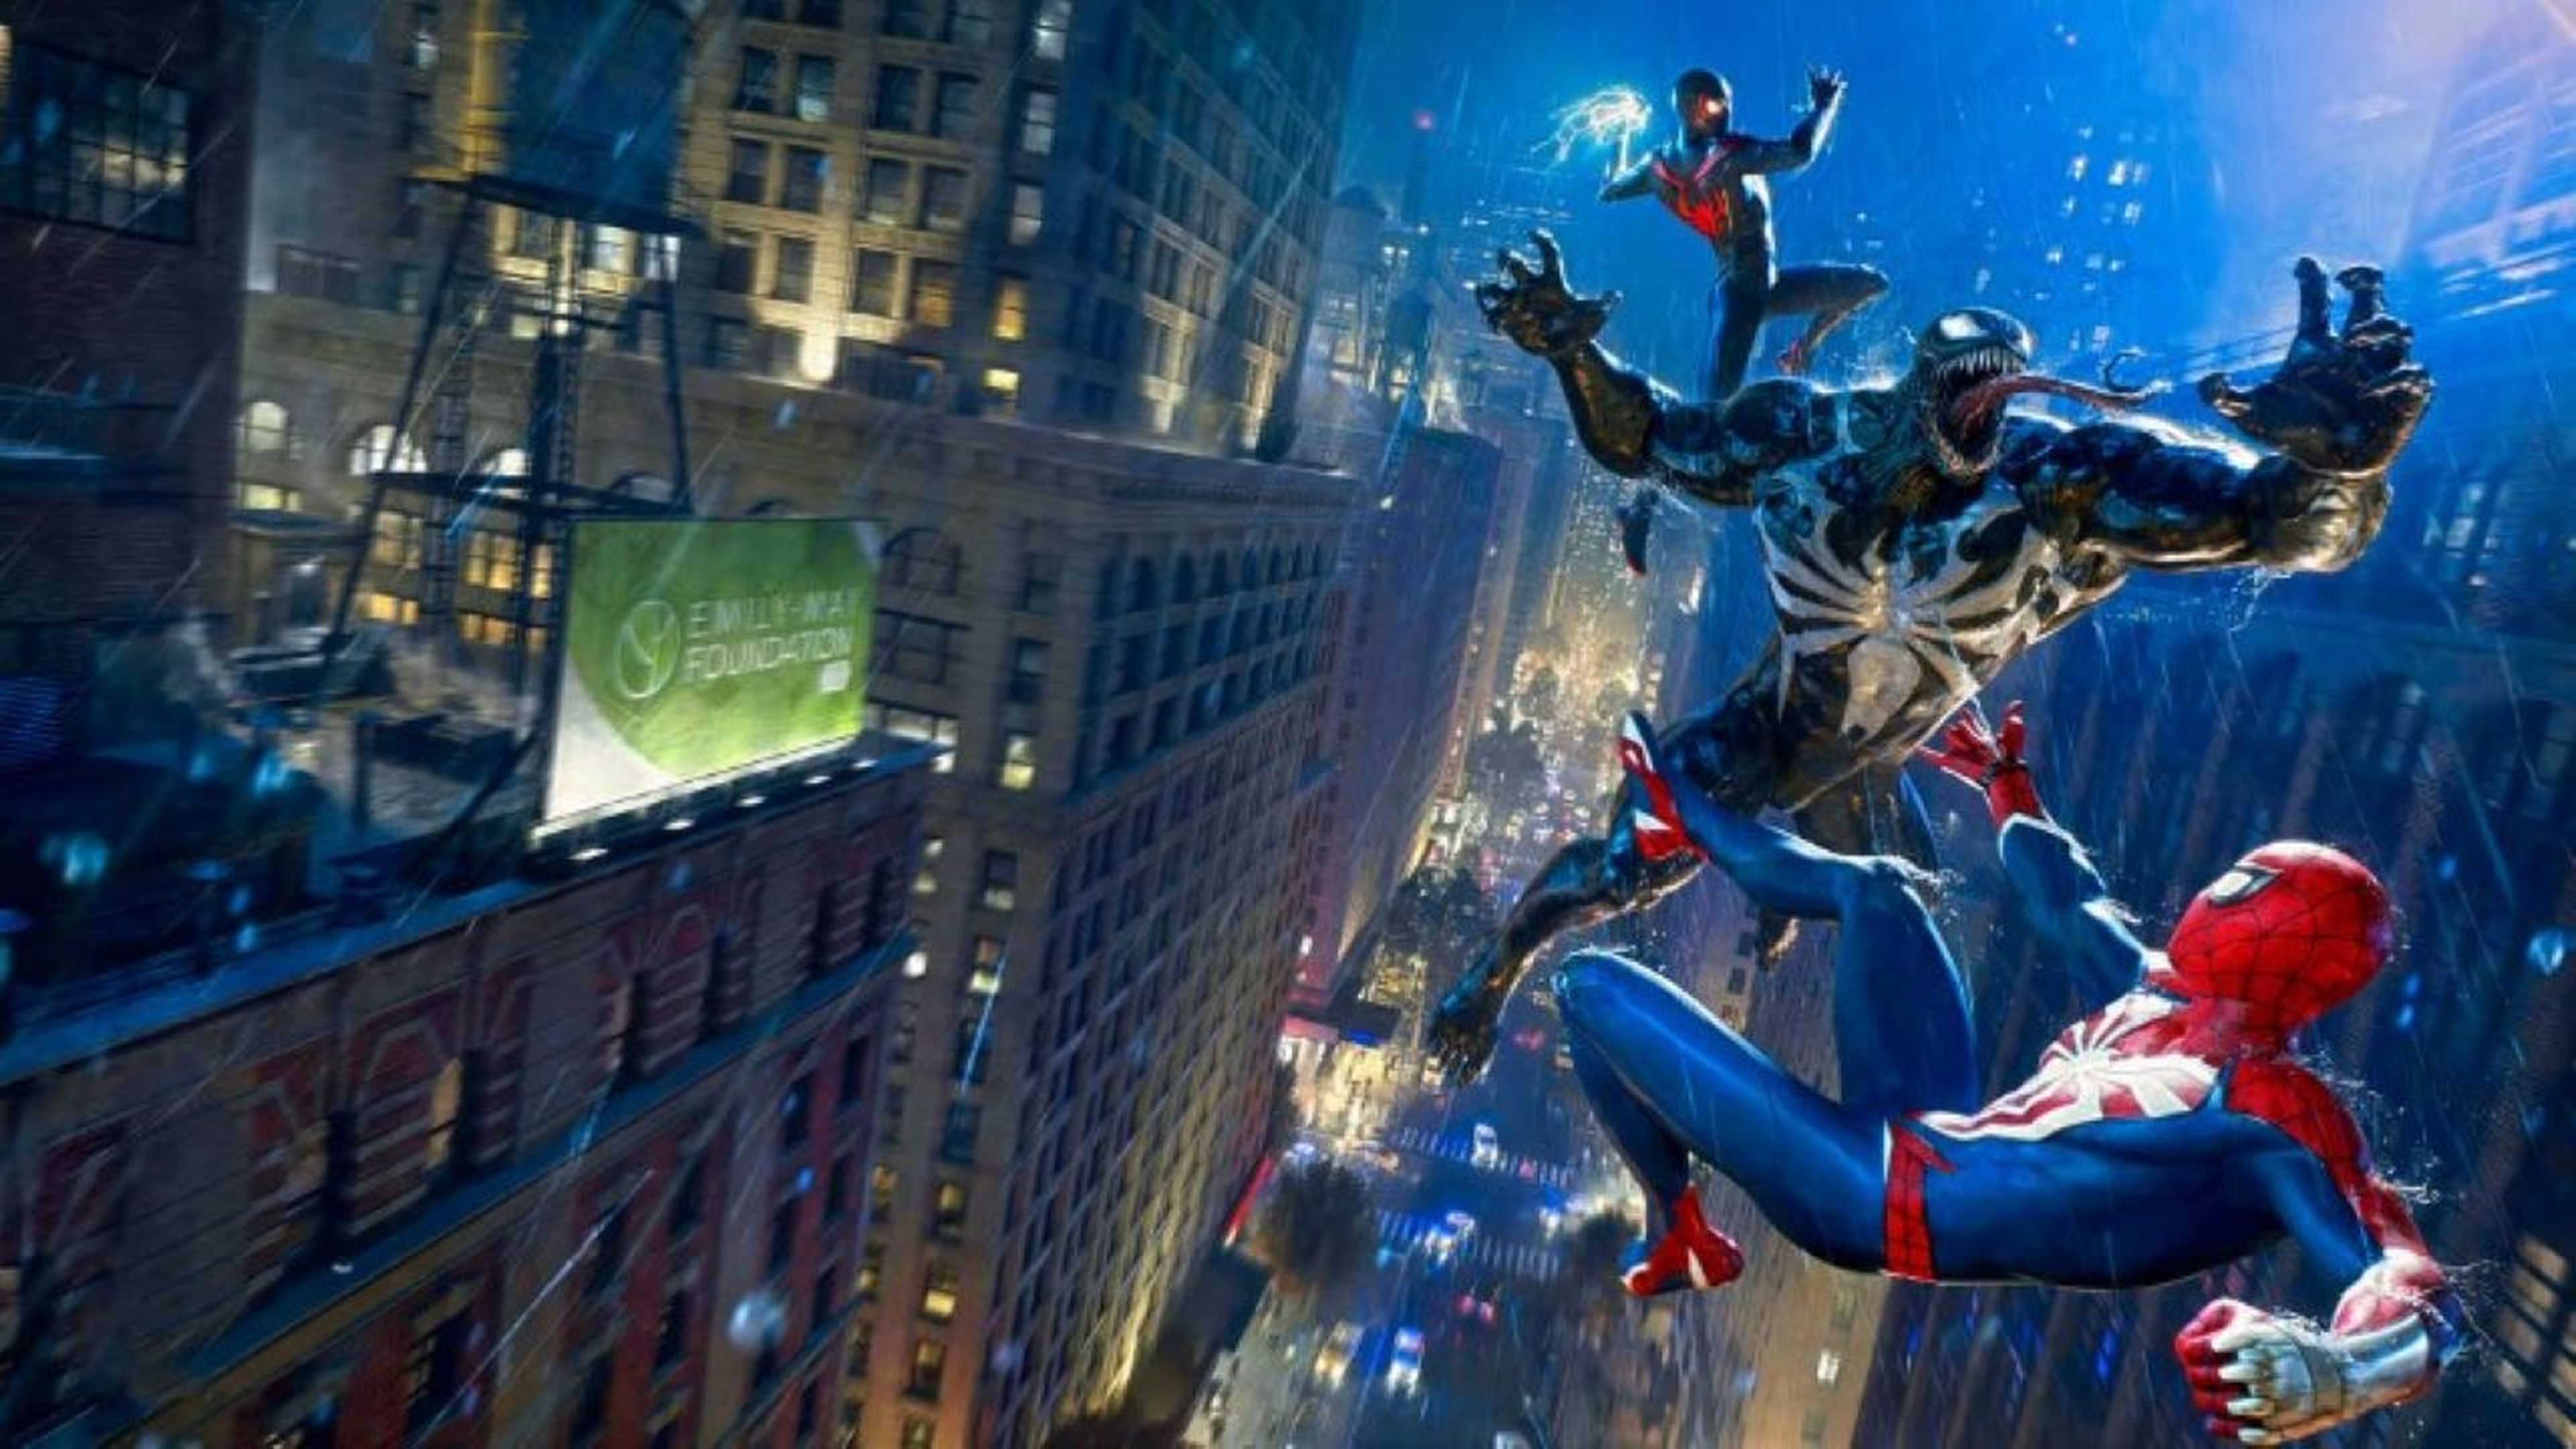 Marvel's Spider-Man 2 saldrá en PS4?